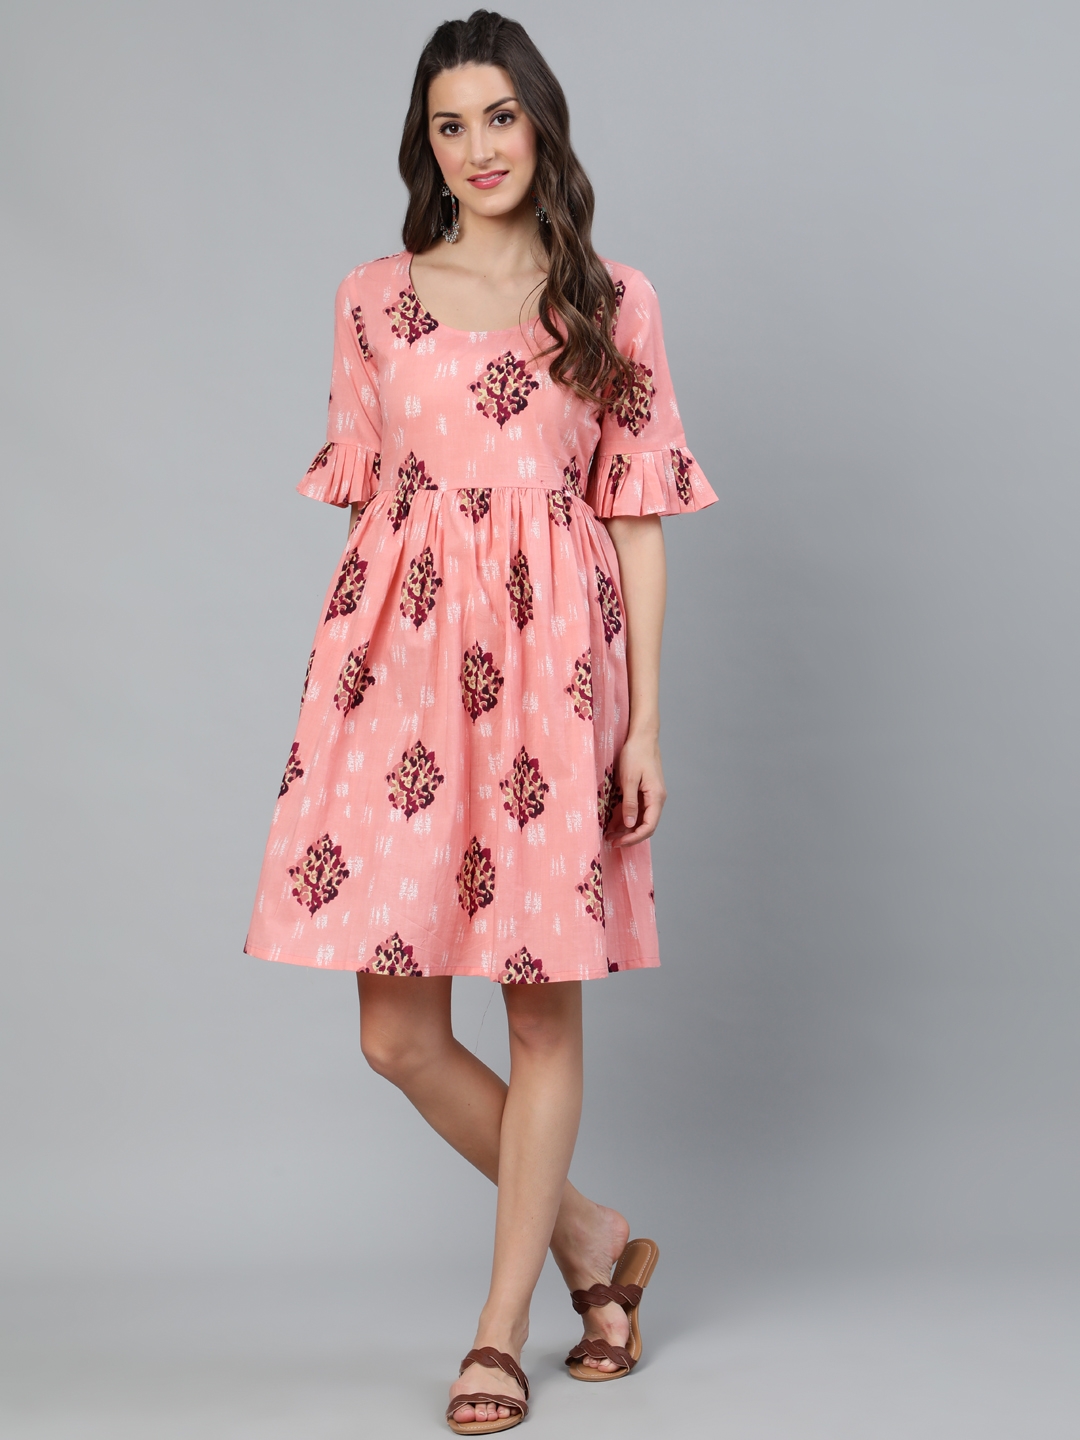 ANTARAN | Peach Floral Printed gathered Dress